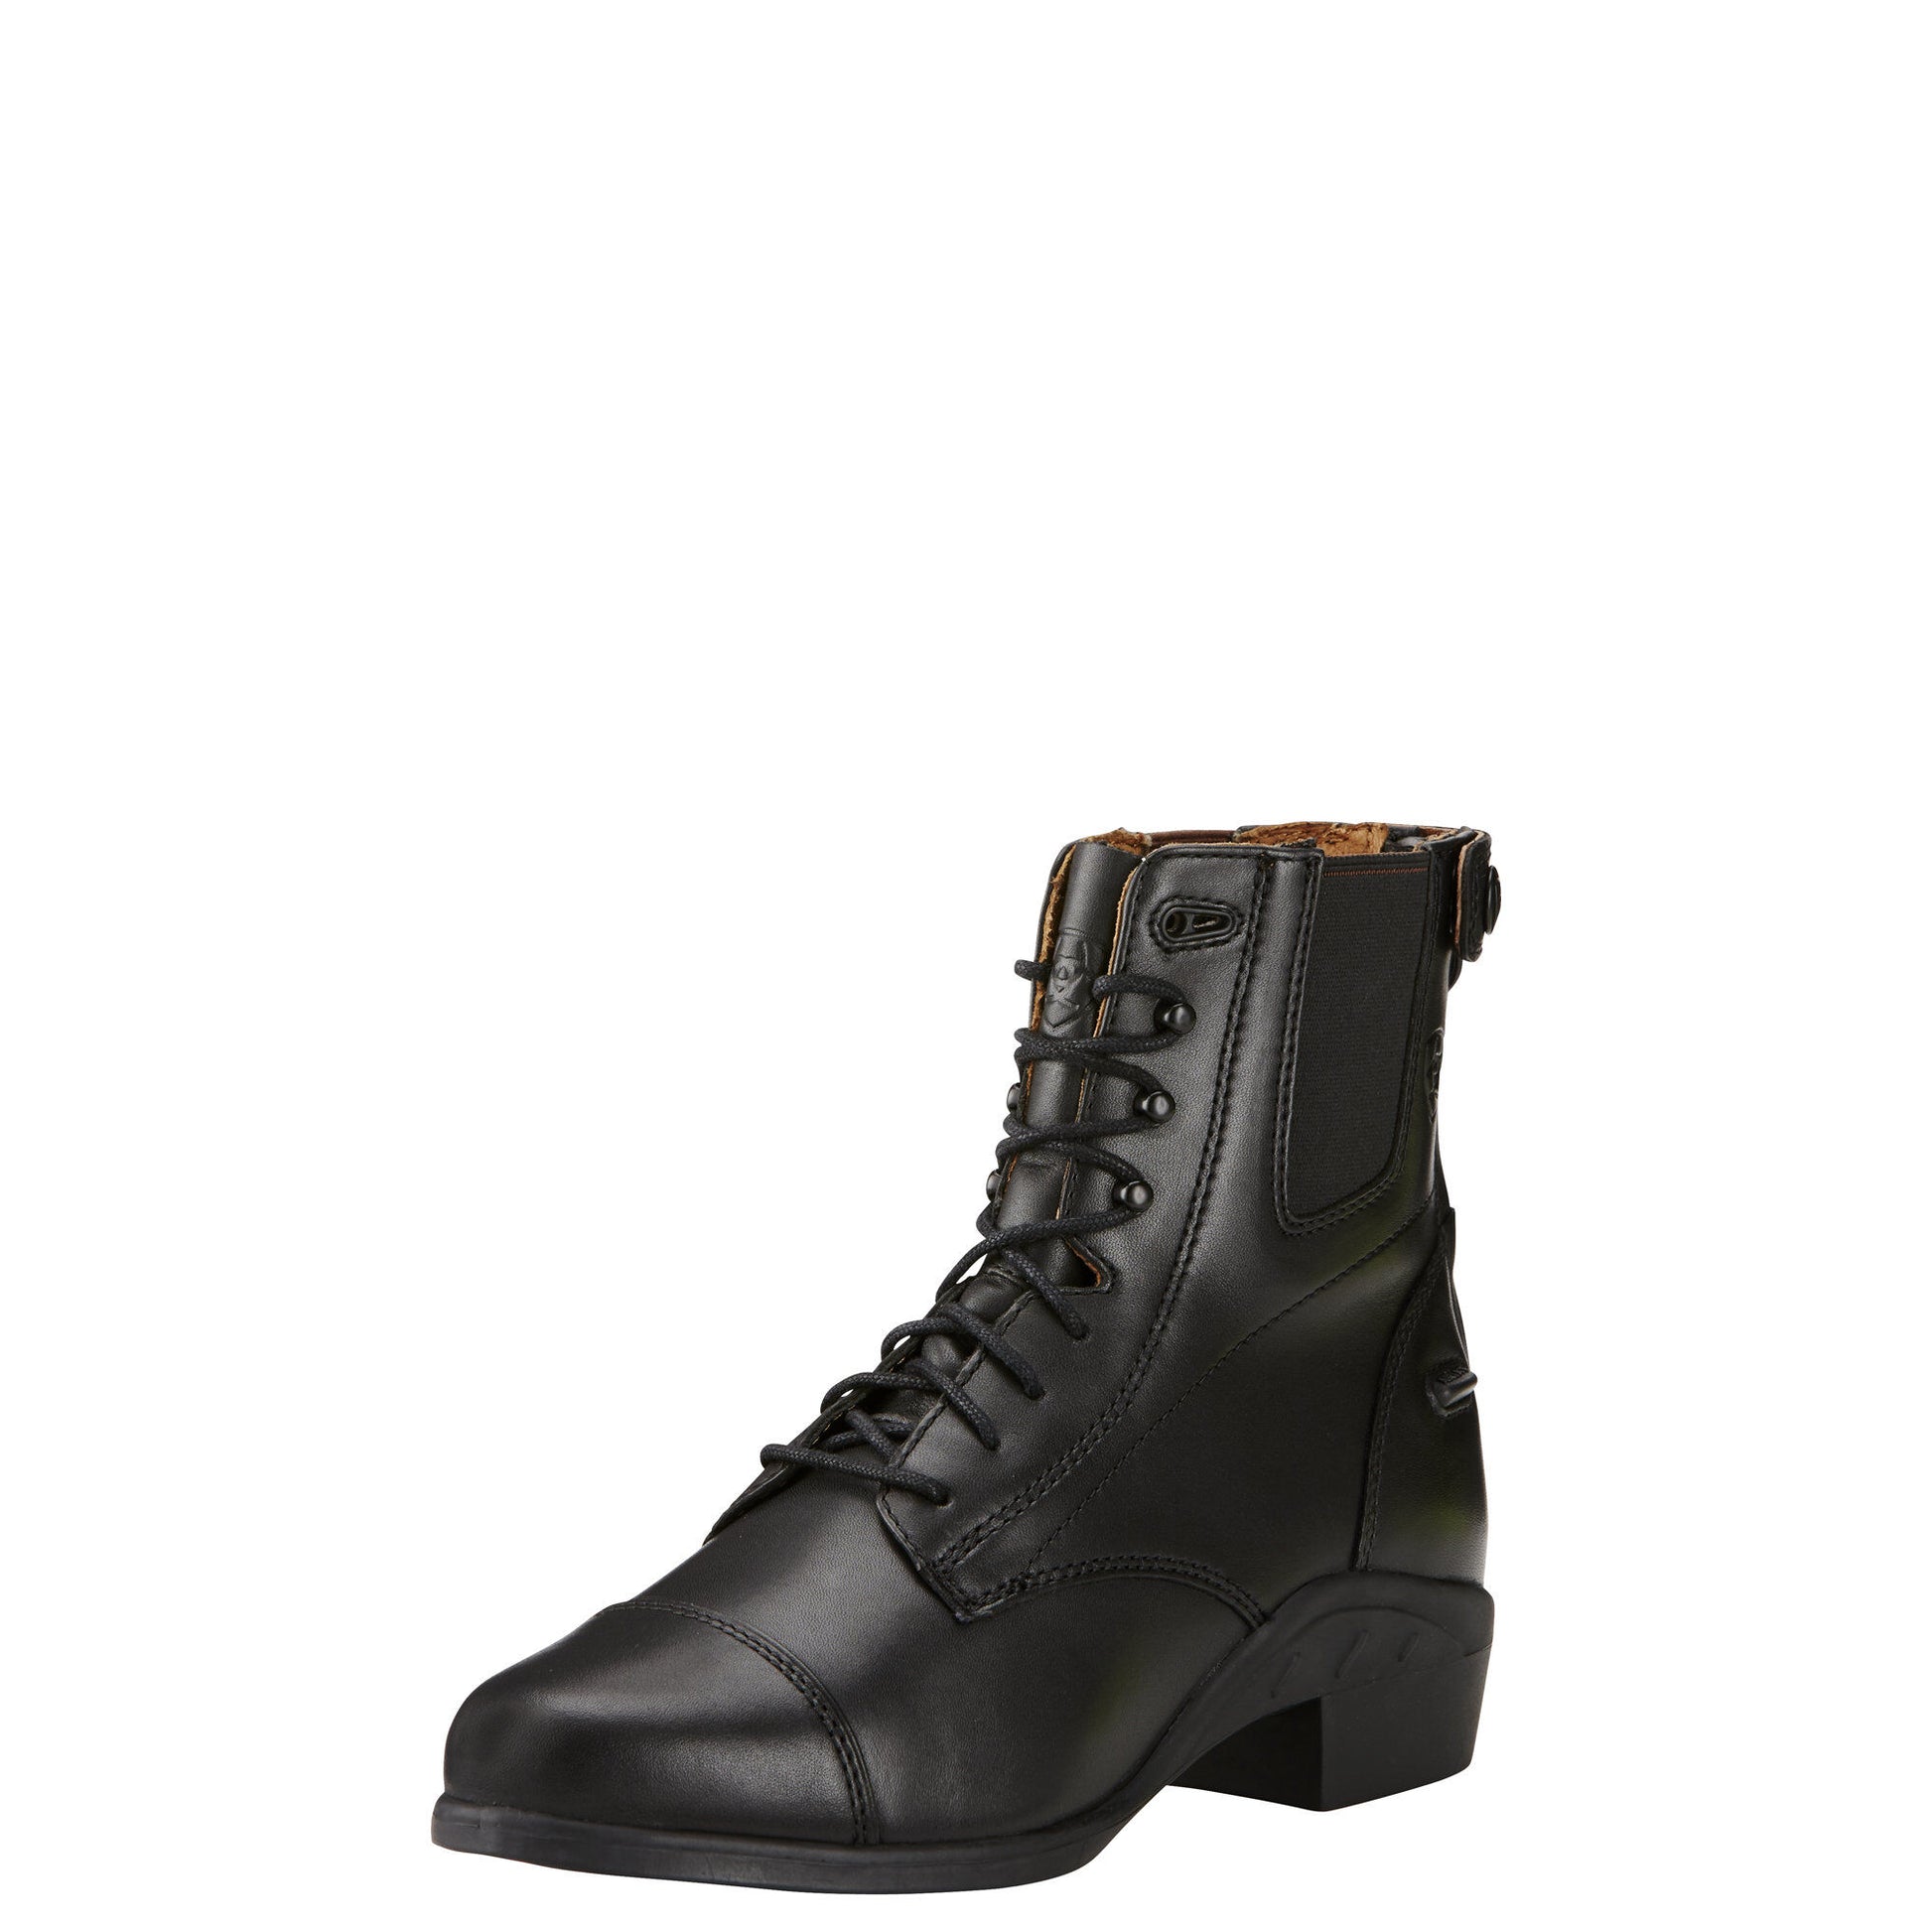 Ariat Women's Performer Zip Paddock Boot - Black - French's Boots